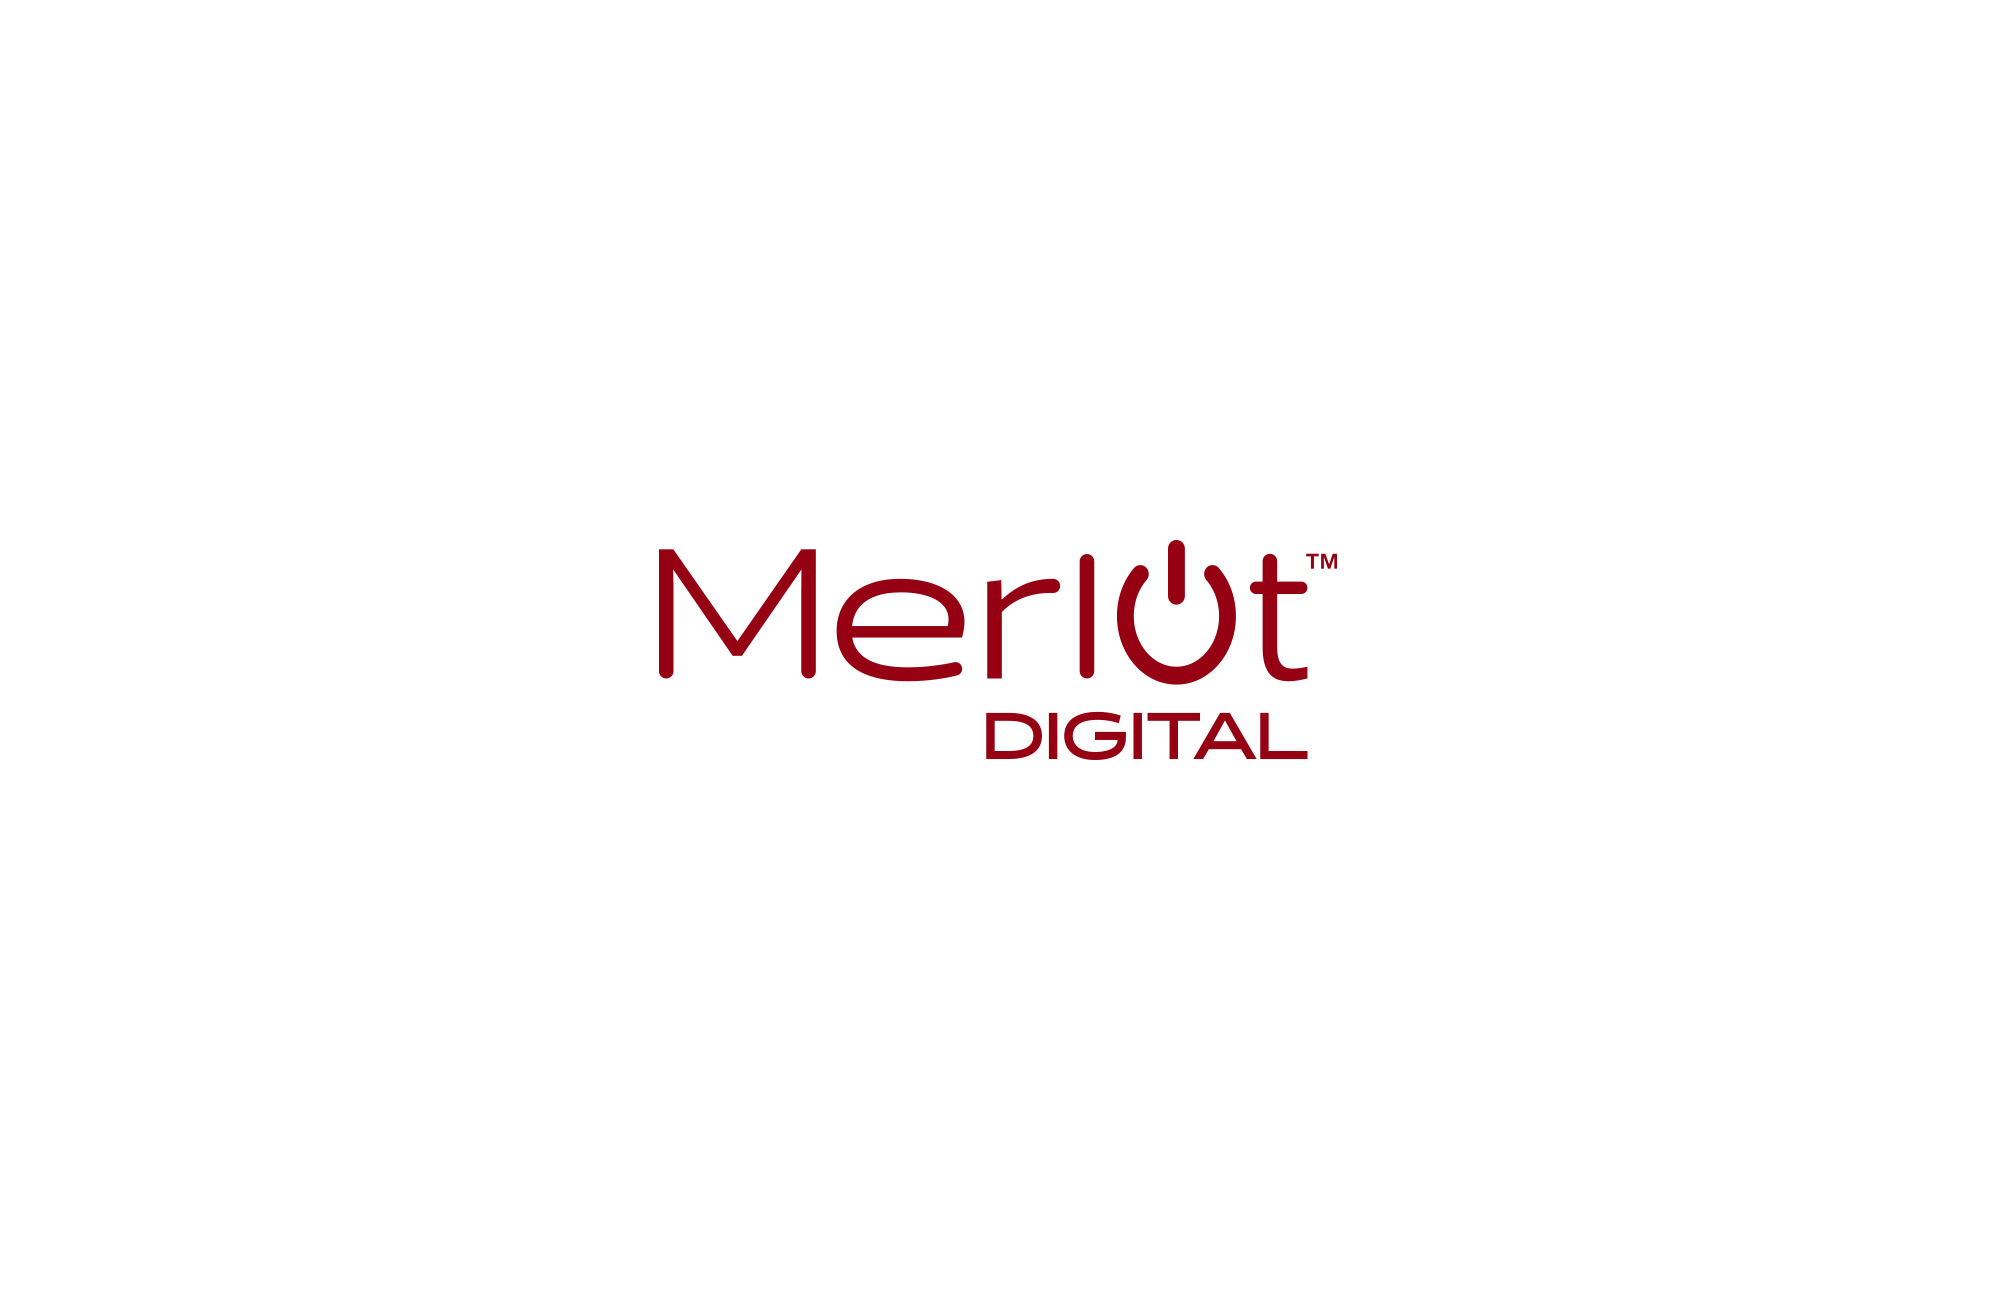 Merlot.digital